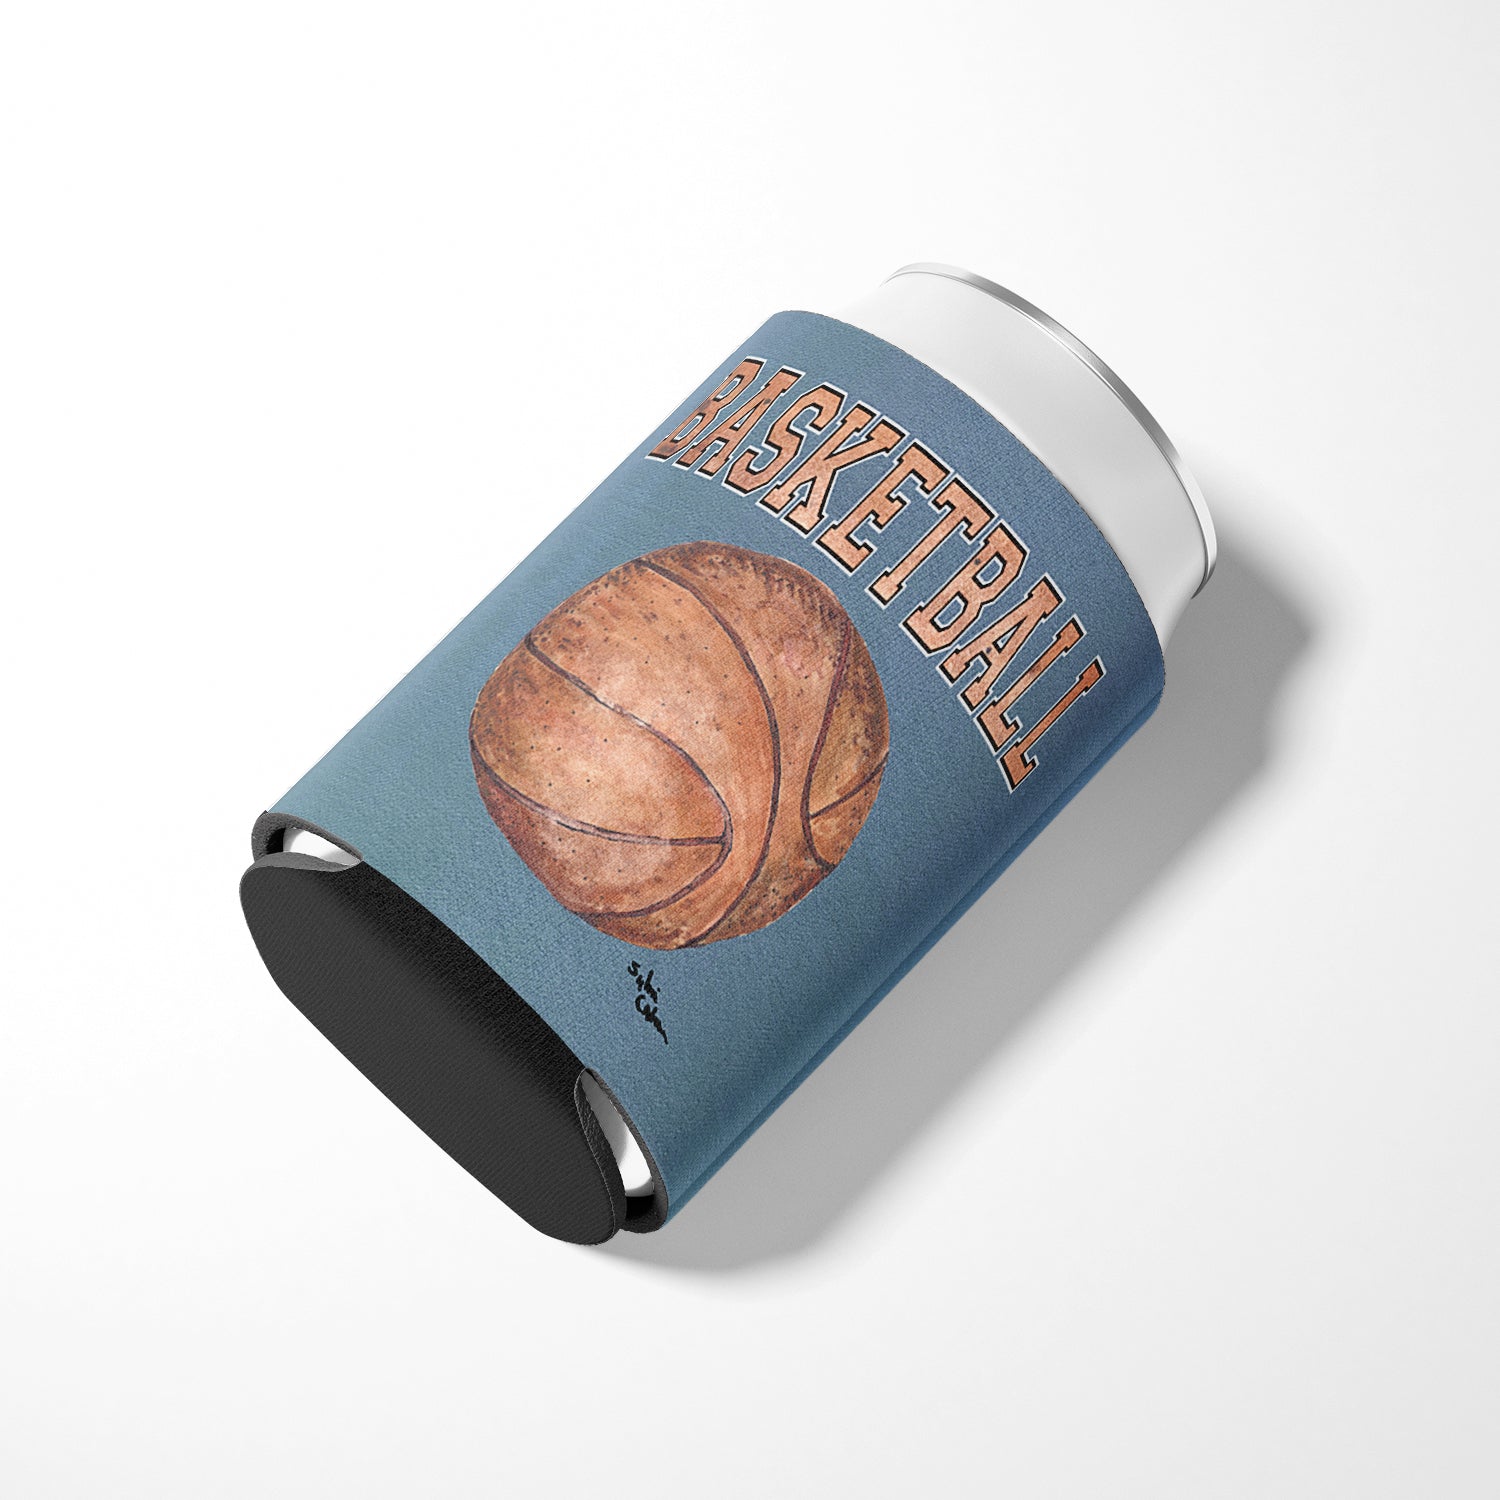 Basketball Can or Bottle Beverage Insulator Hugger